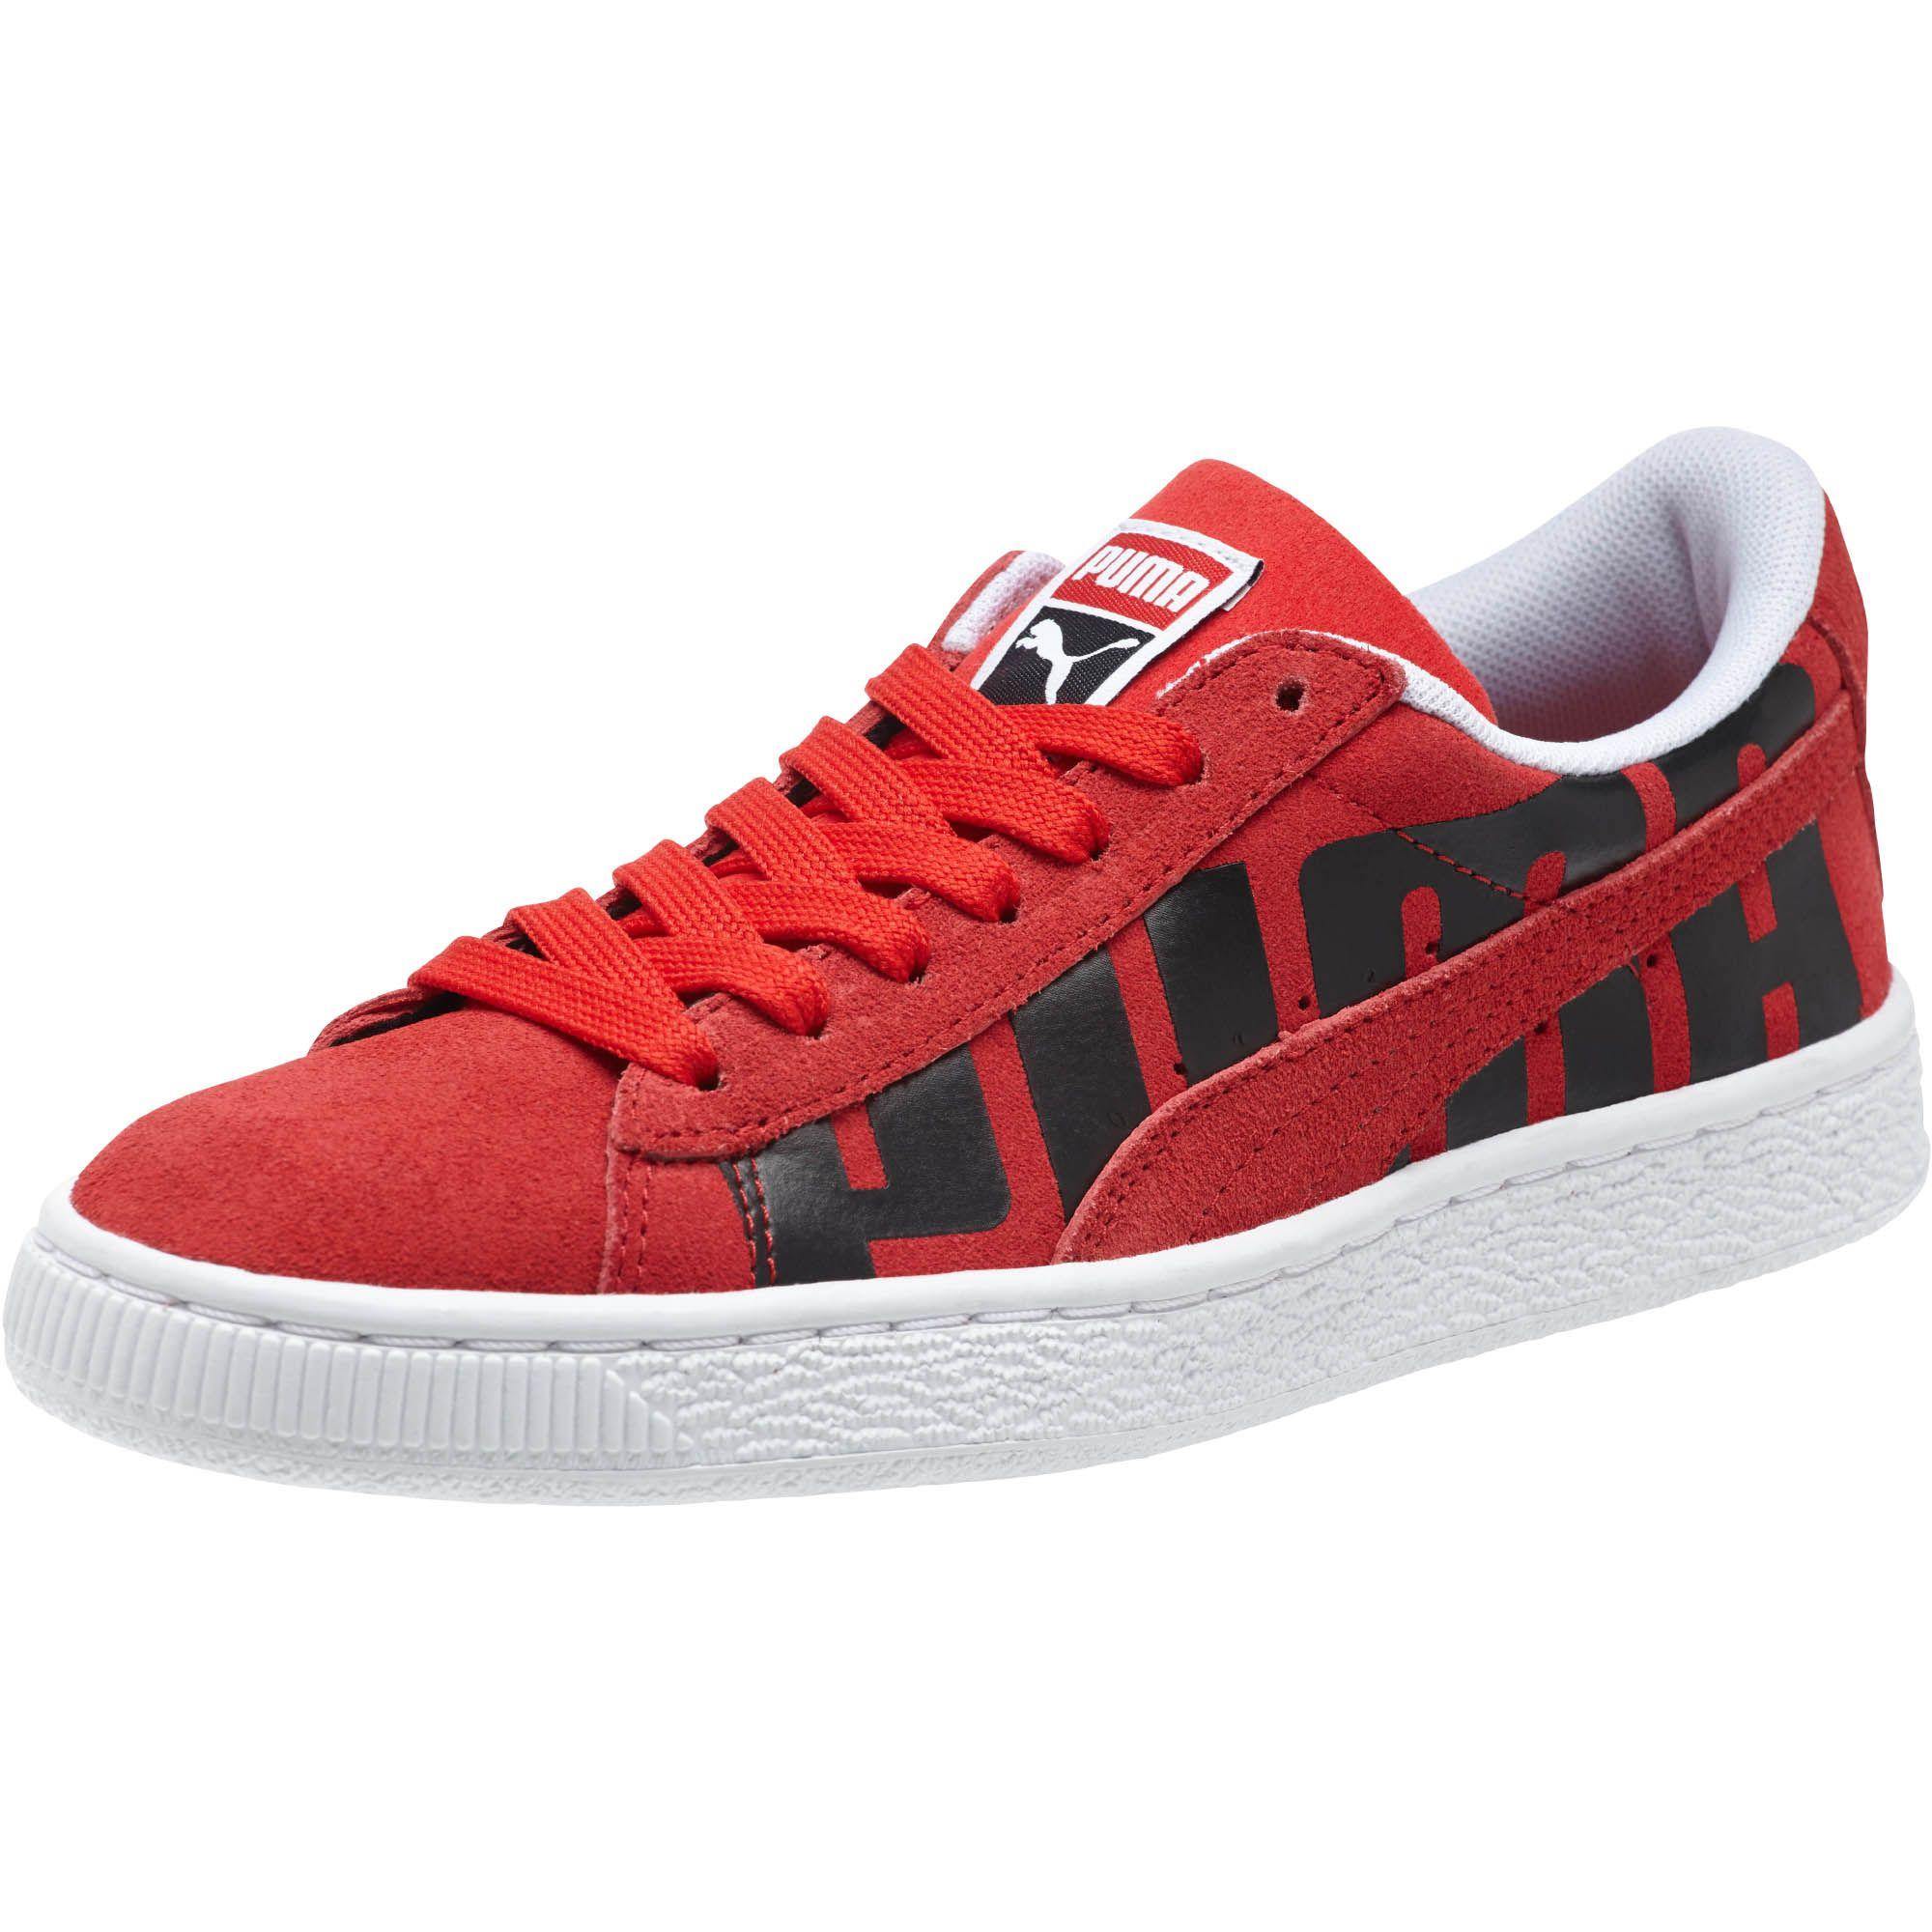 Red Black White B Logo - Puma Sneakers On Sale. Puma Suede Classic Big Logo Jr Red